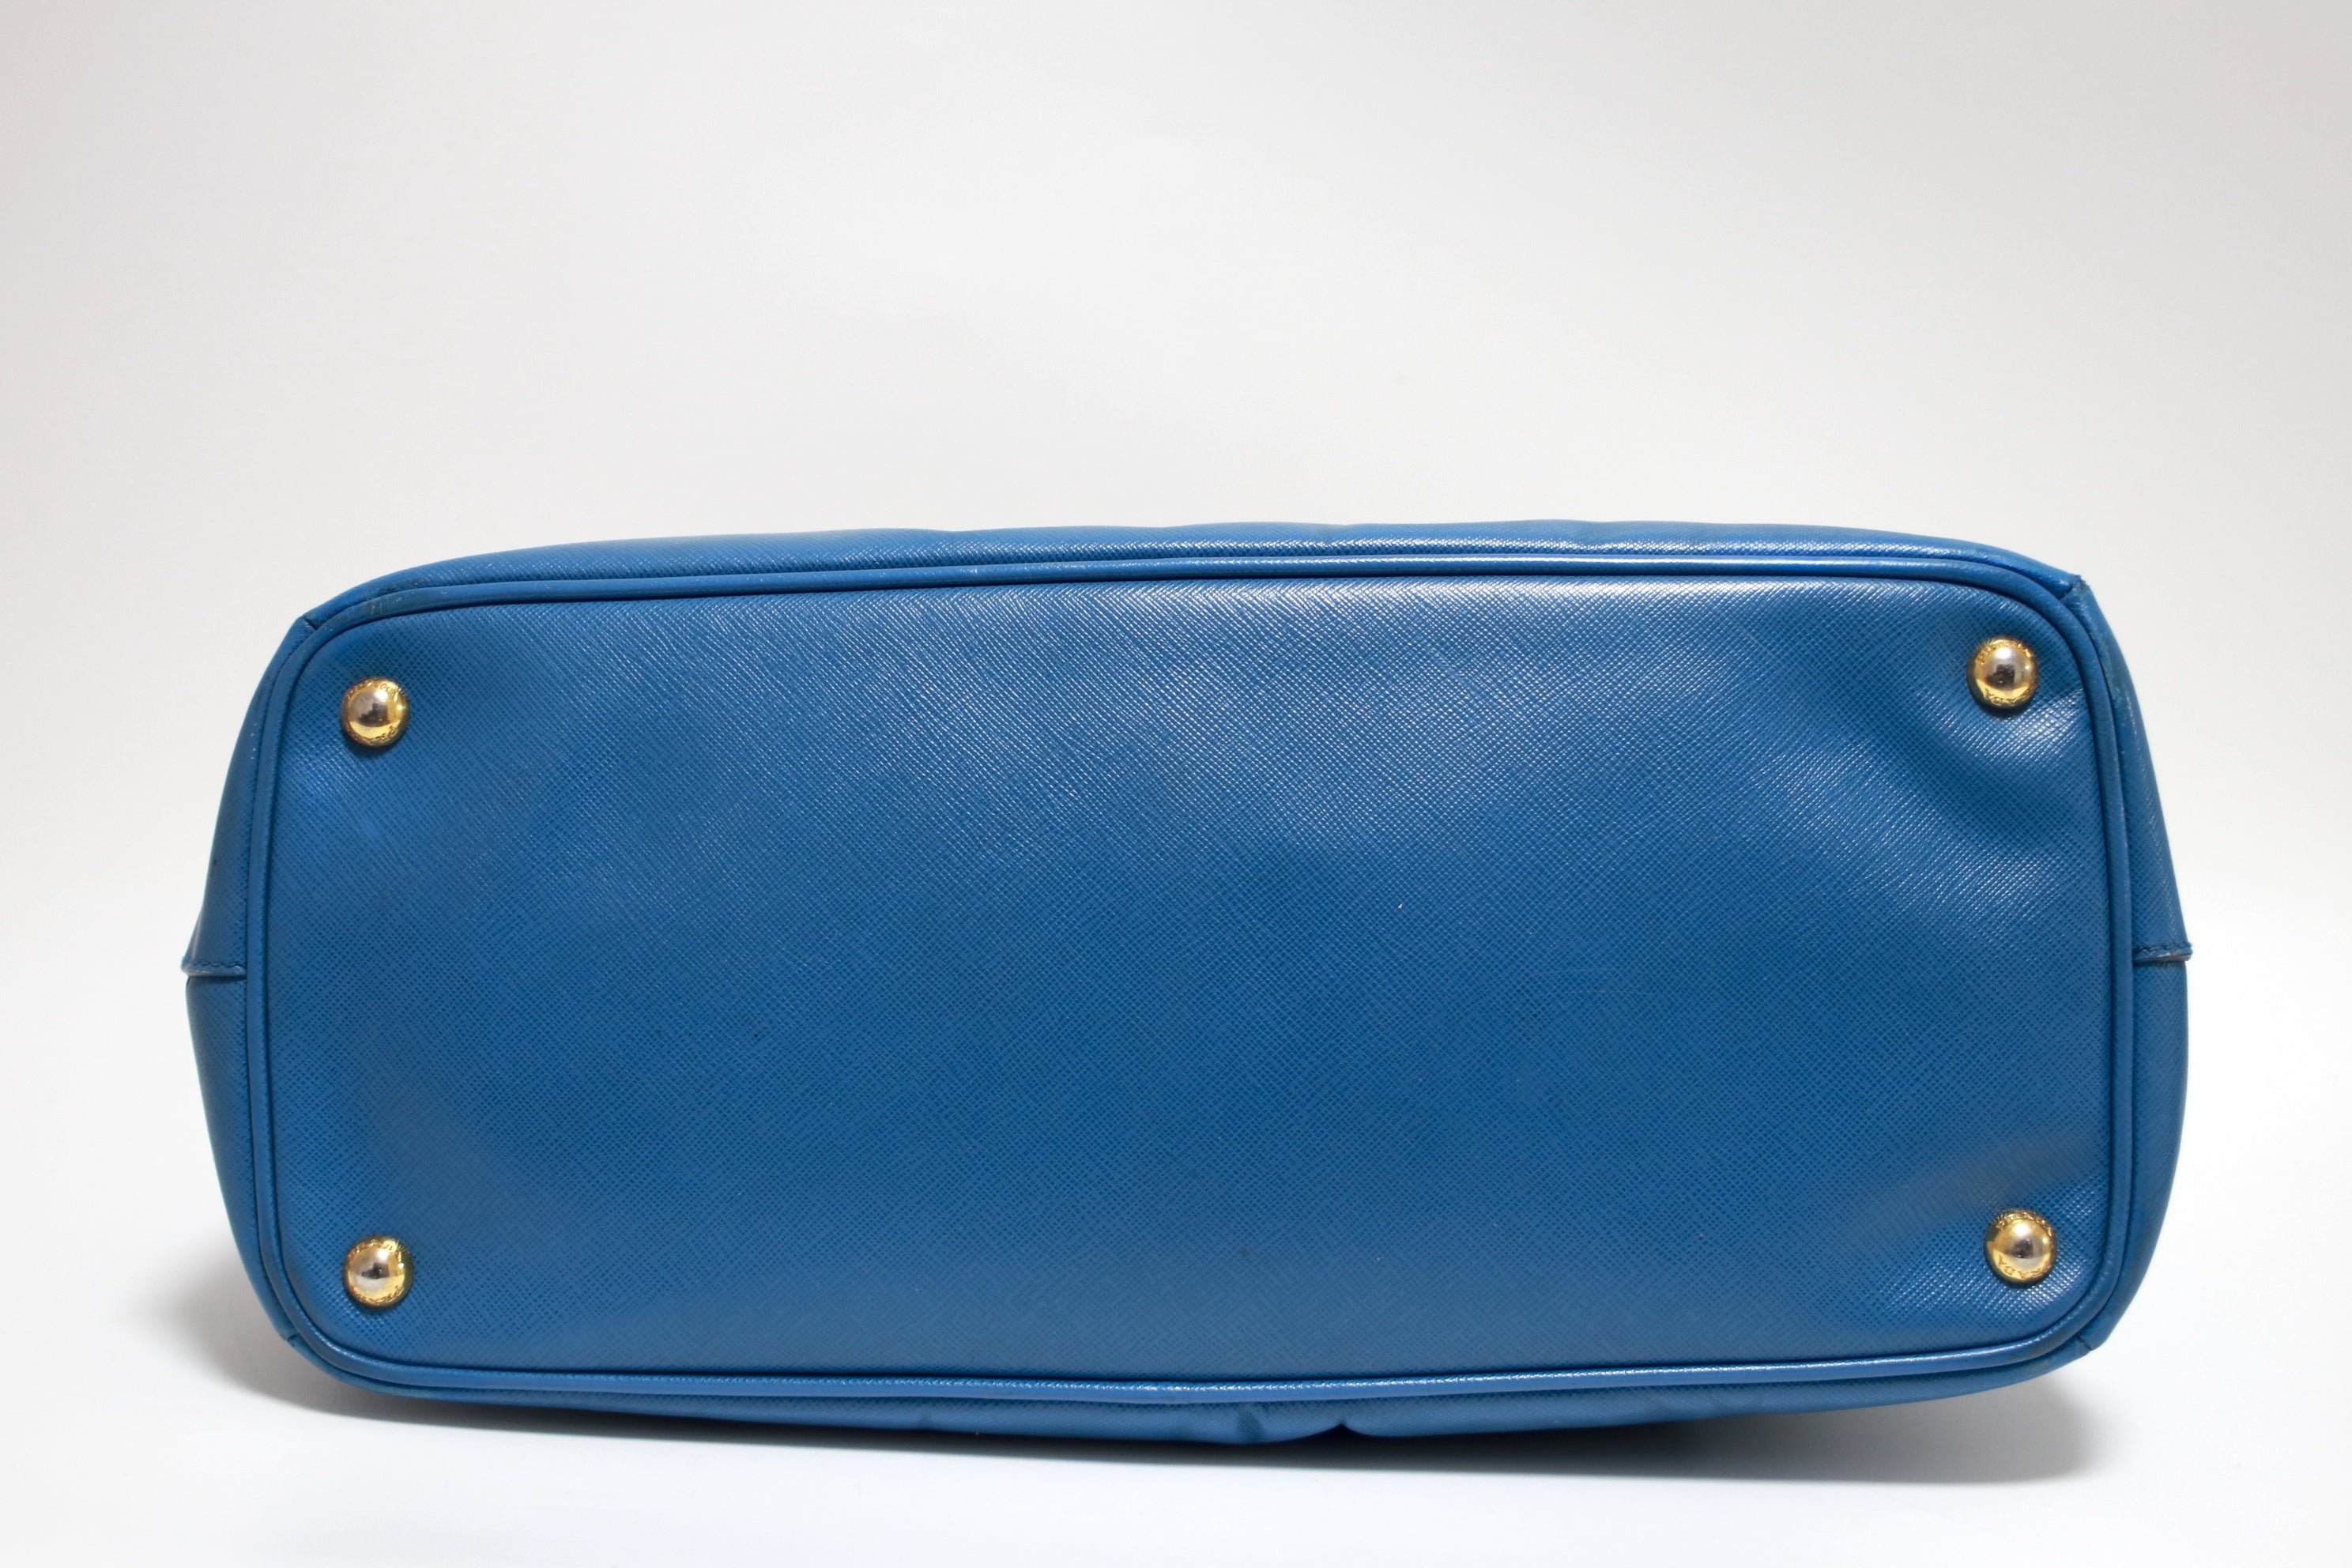 Prada Saffiano Tote Bag Blue Used (6984)